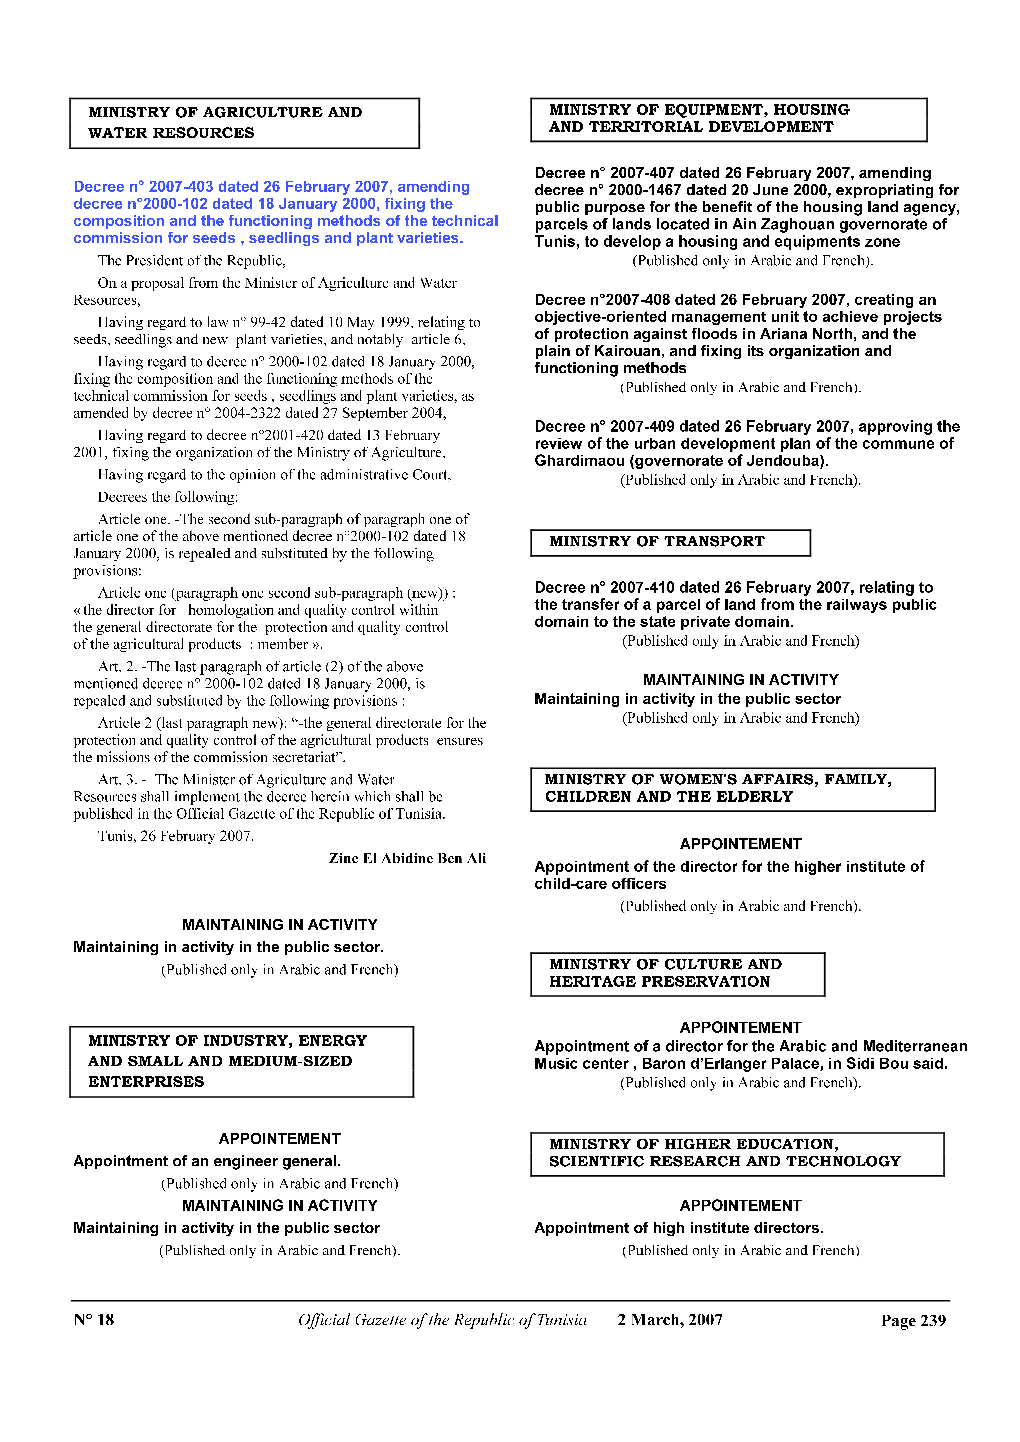 Decree No. 2007-403 of February 26, 2007, on Amendments to Decree